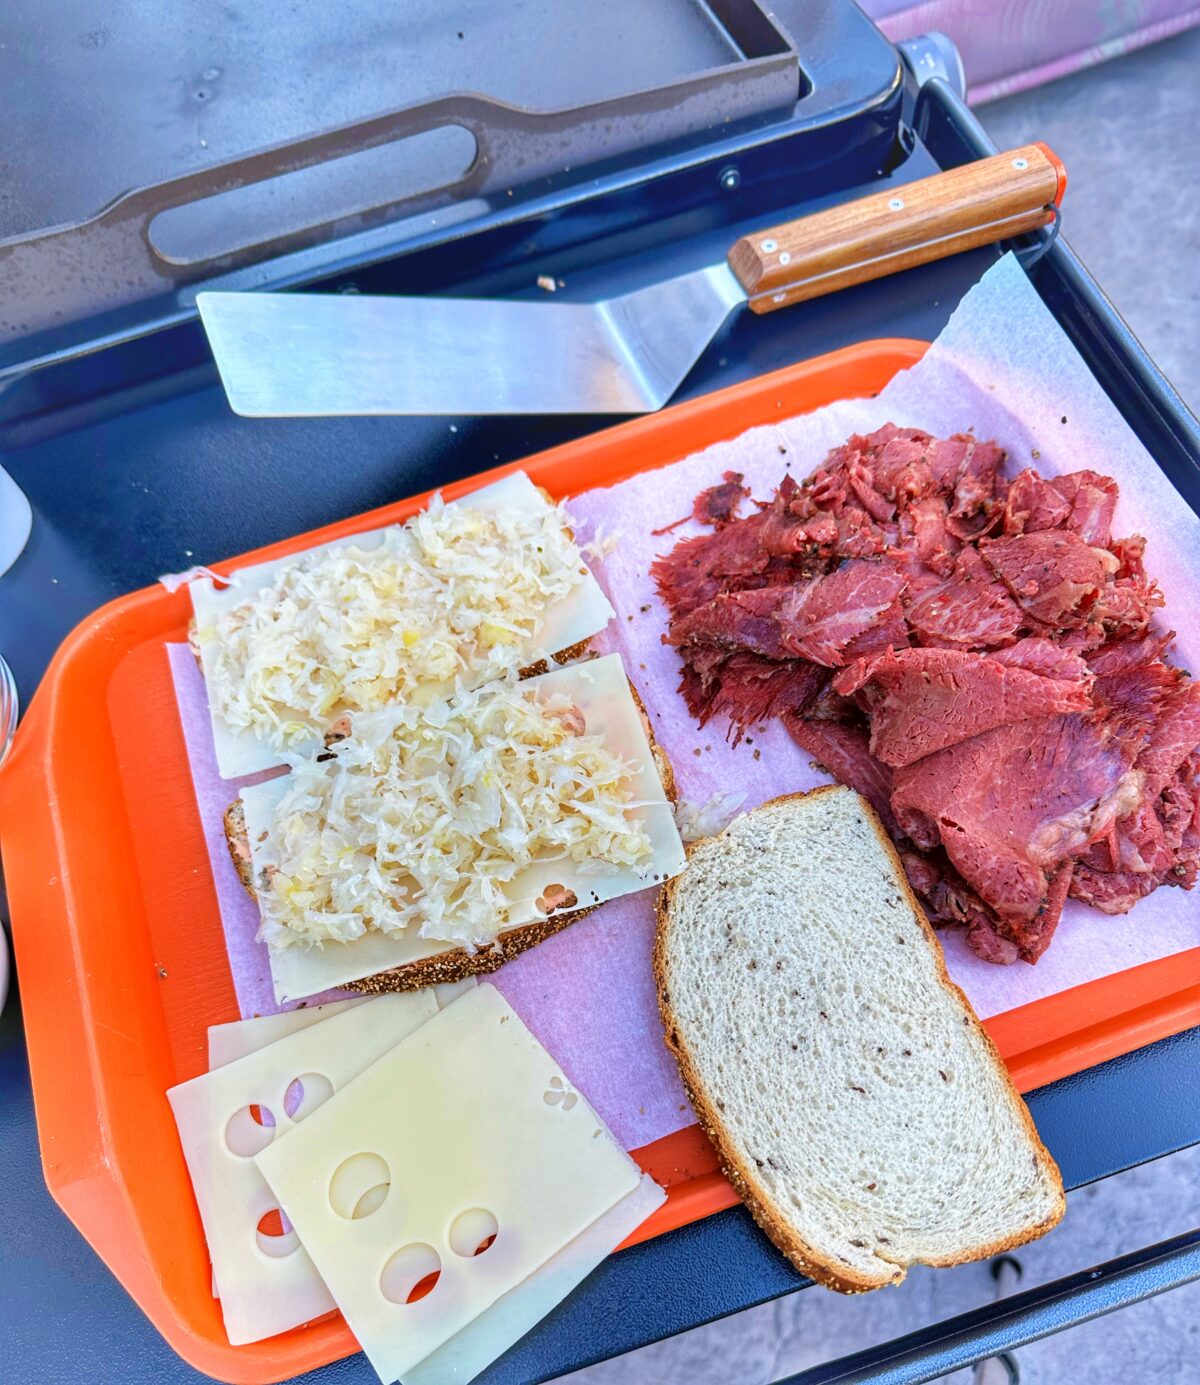 Reuben sandwich assembly on an orange tray.